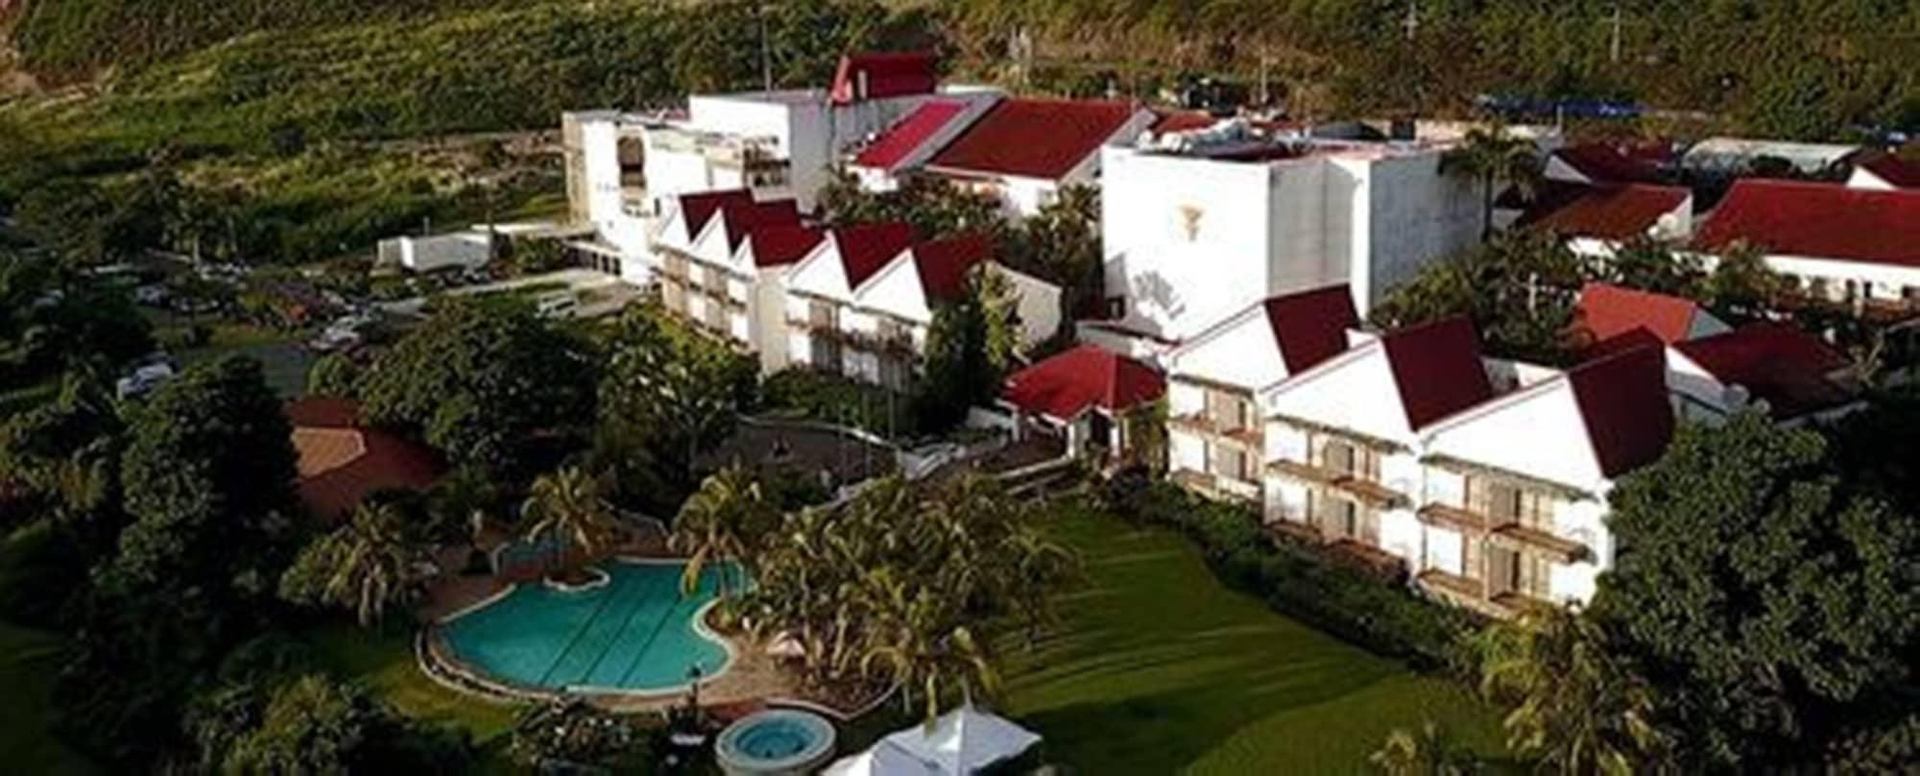 Exterior & Views 1, Thunderbird Resorts - Rizal, Binangonan